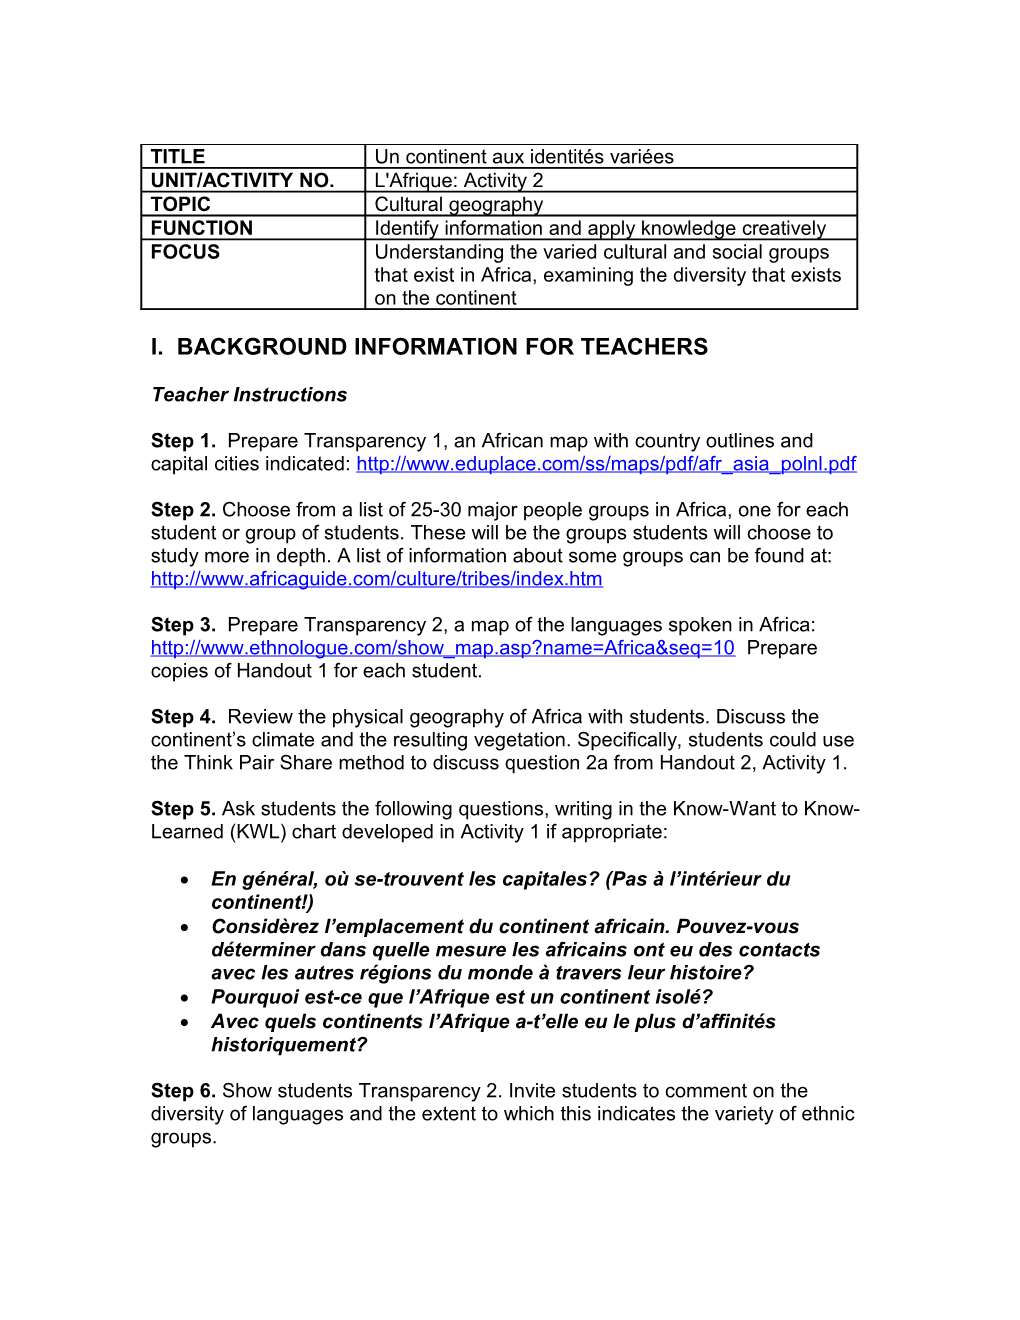 I. Background Information for Teachers s4